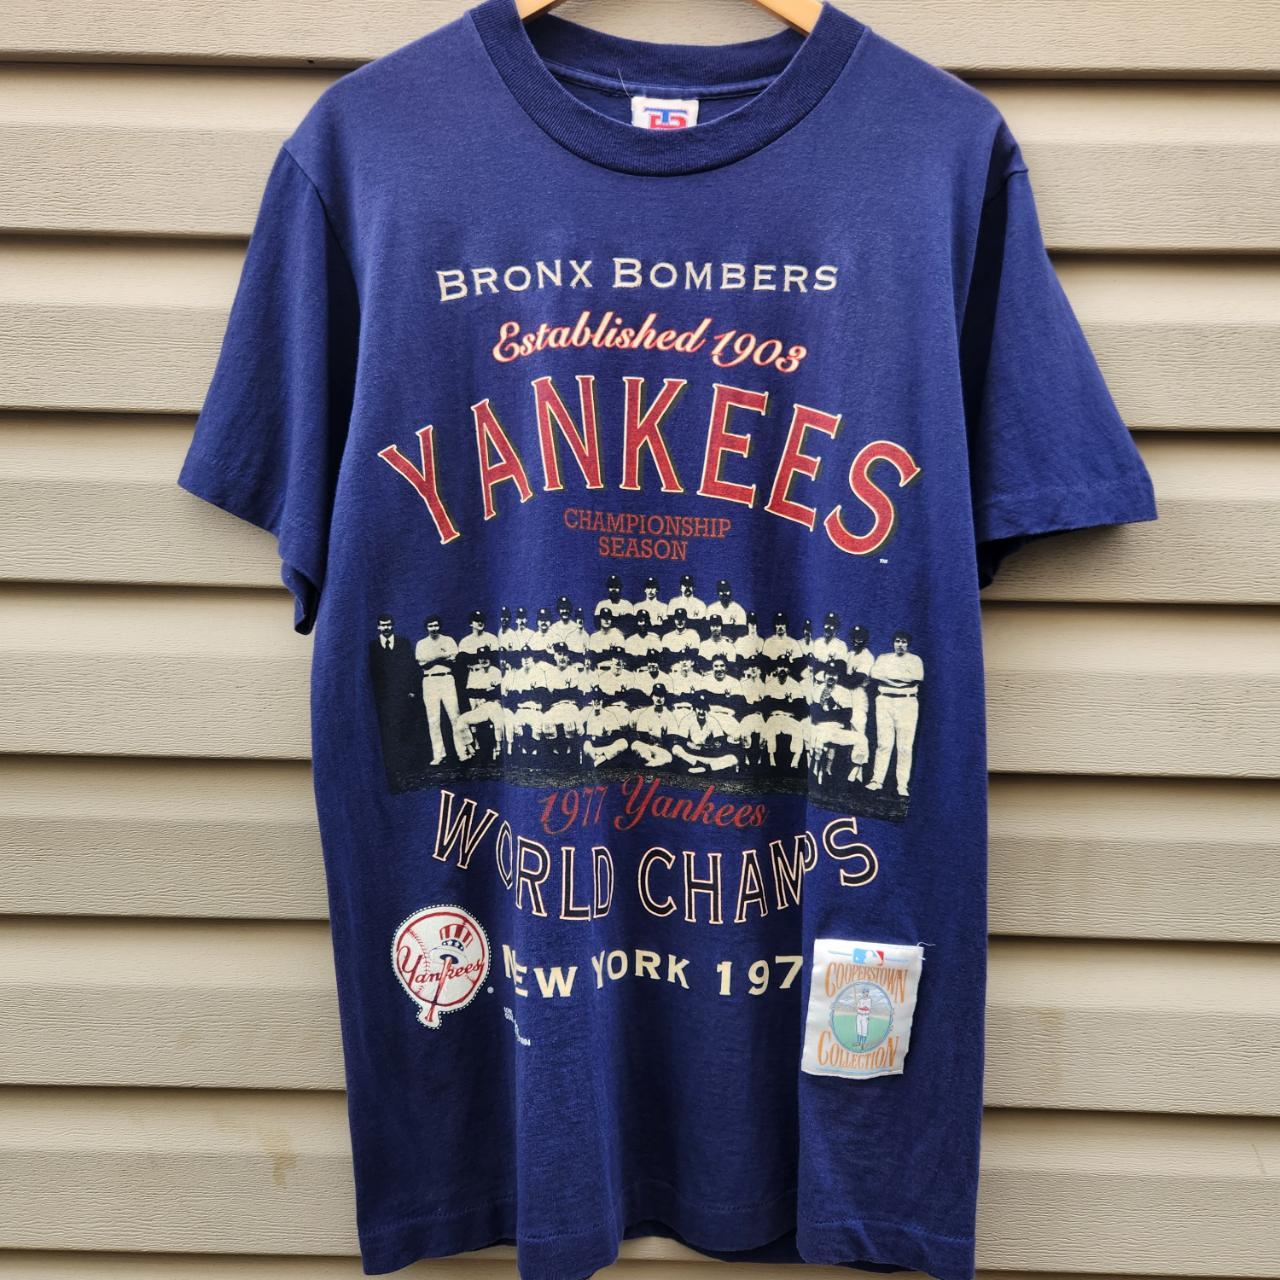 1997 Yankees World Champs Bronx Bombers - Depop